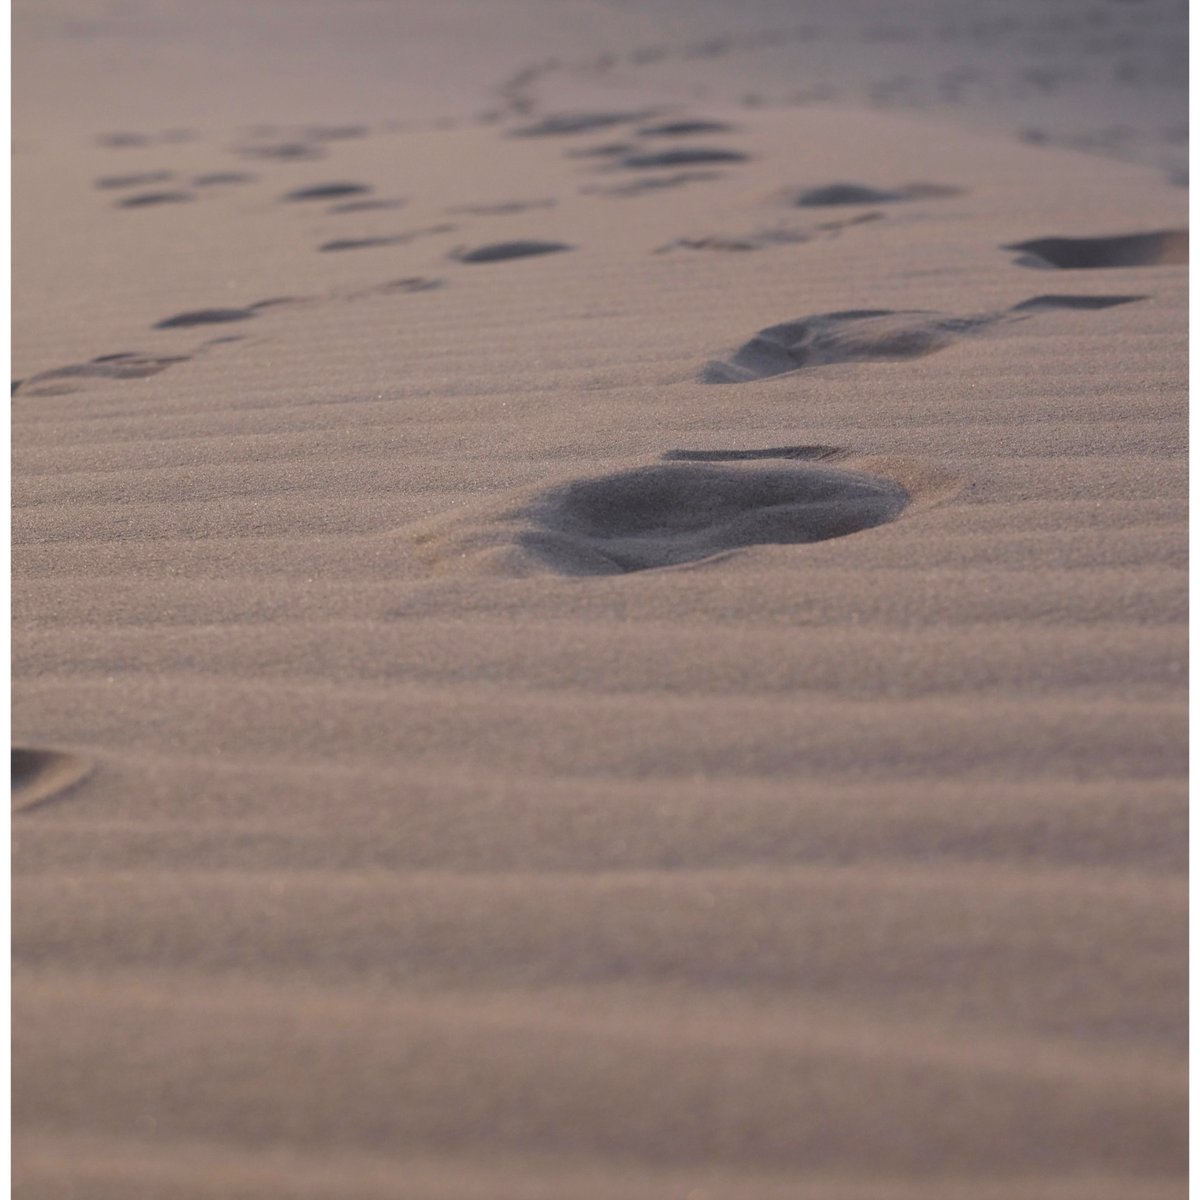 Sunrise on the desert sand! 

#sandhill #sand-dune #dunes #fujifilmxt3 #helios44 #58mm #vintagelensphotography #SaudiArabia #SaudiExpatriates
#fujifilmksa #fujifilmme